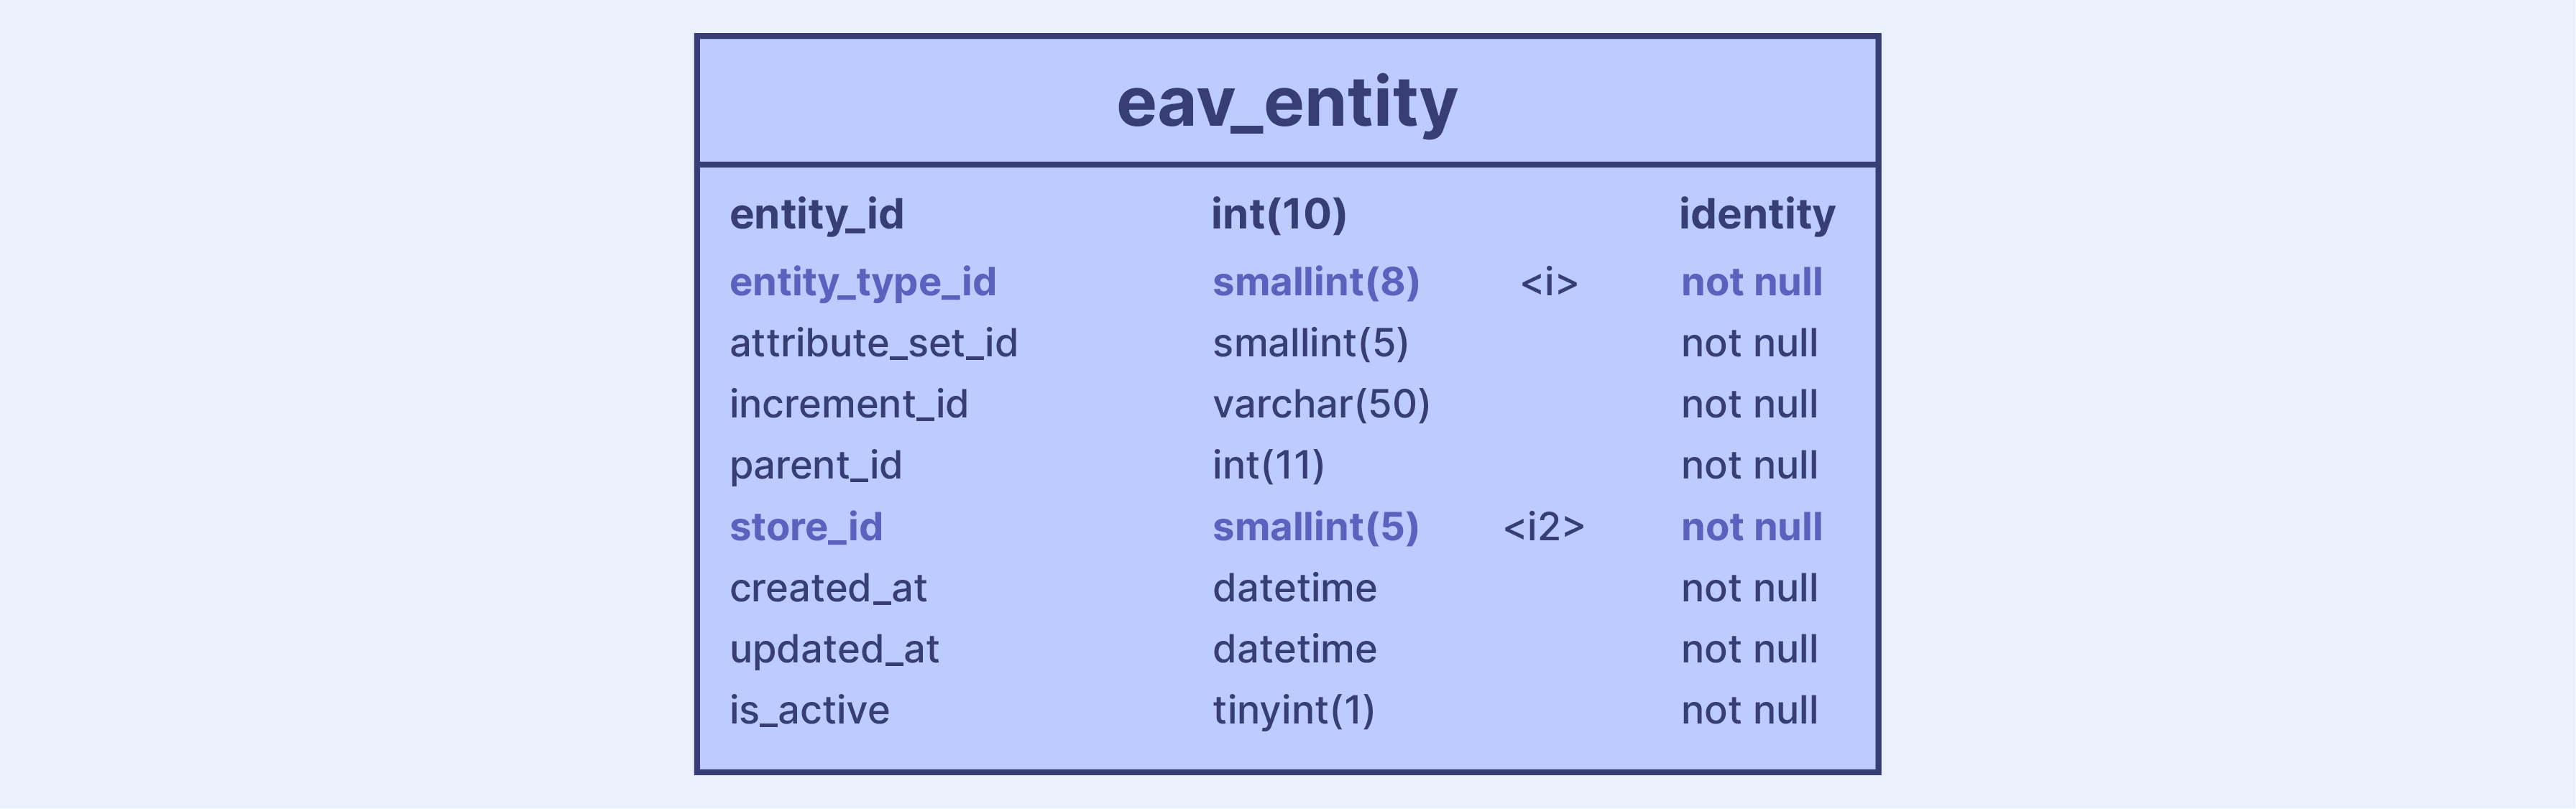 Magento EAV Entity Database Structure showcasing individual entities